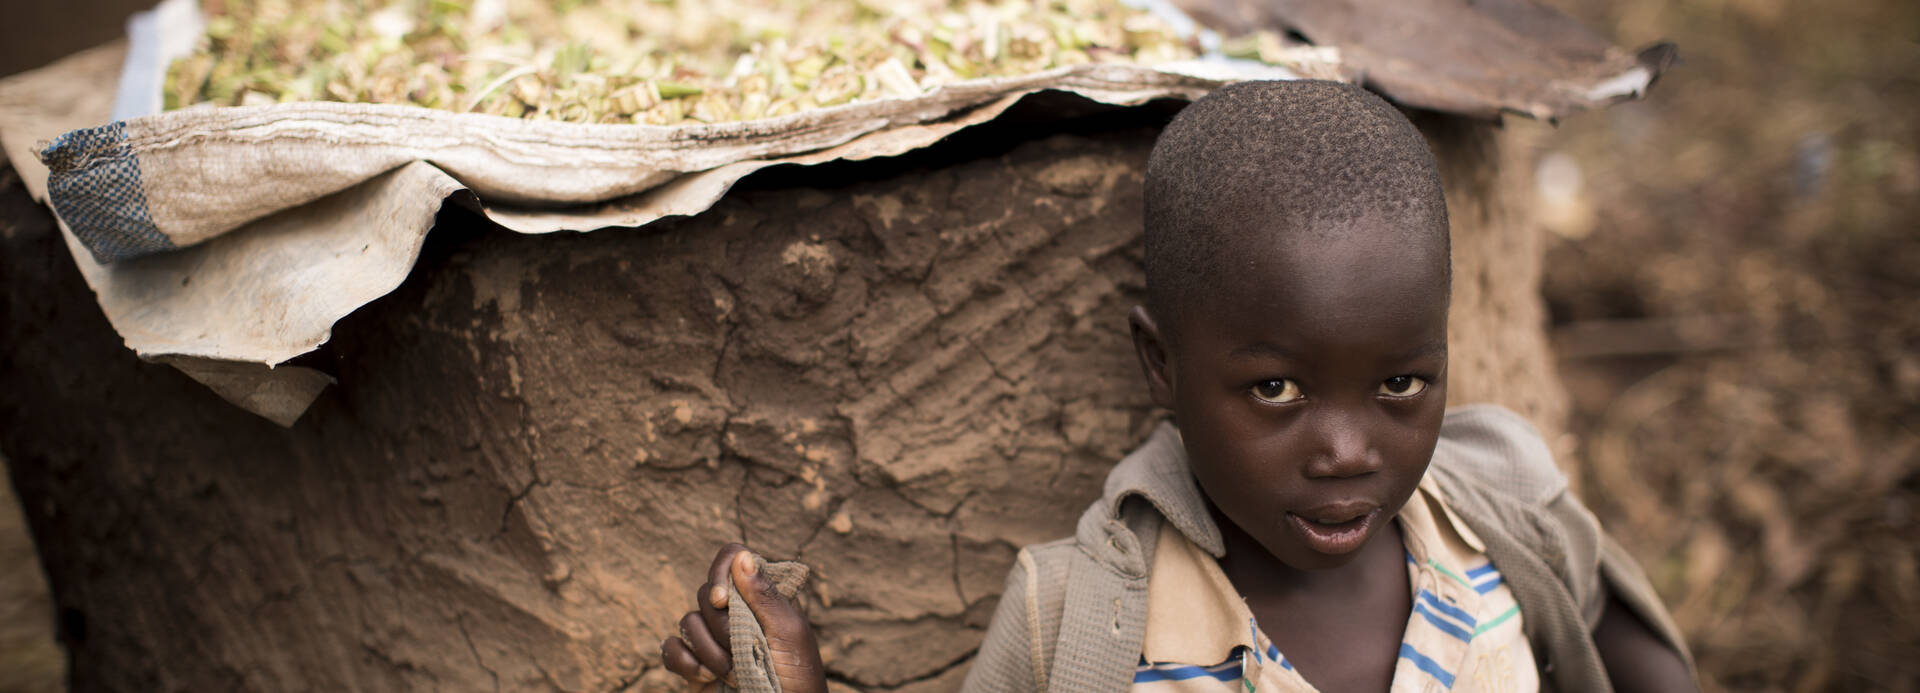 Kind aus Mali